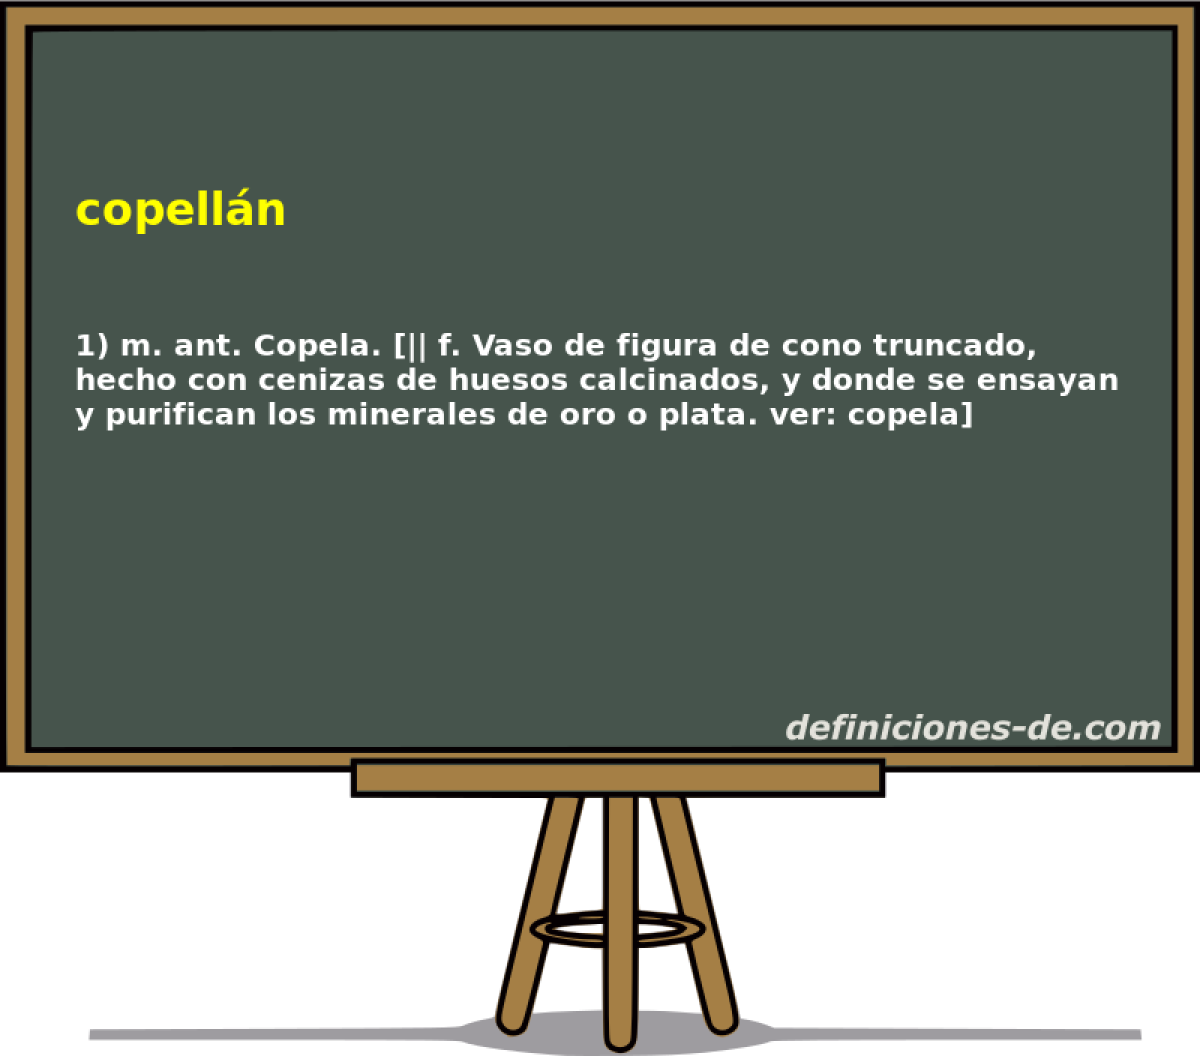 copelln 